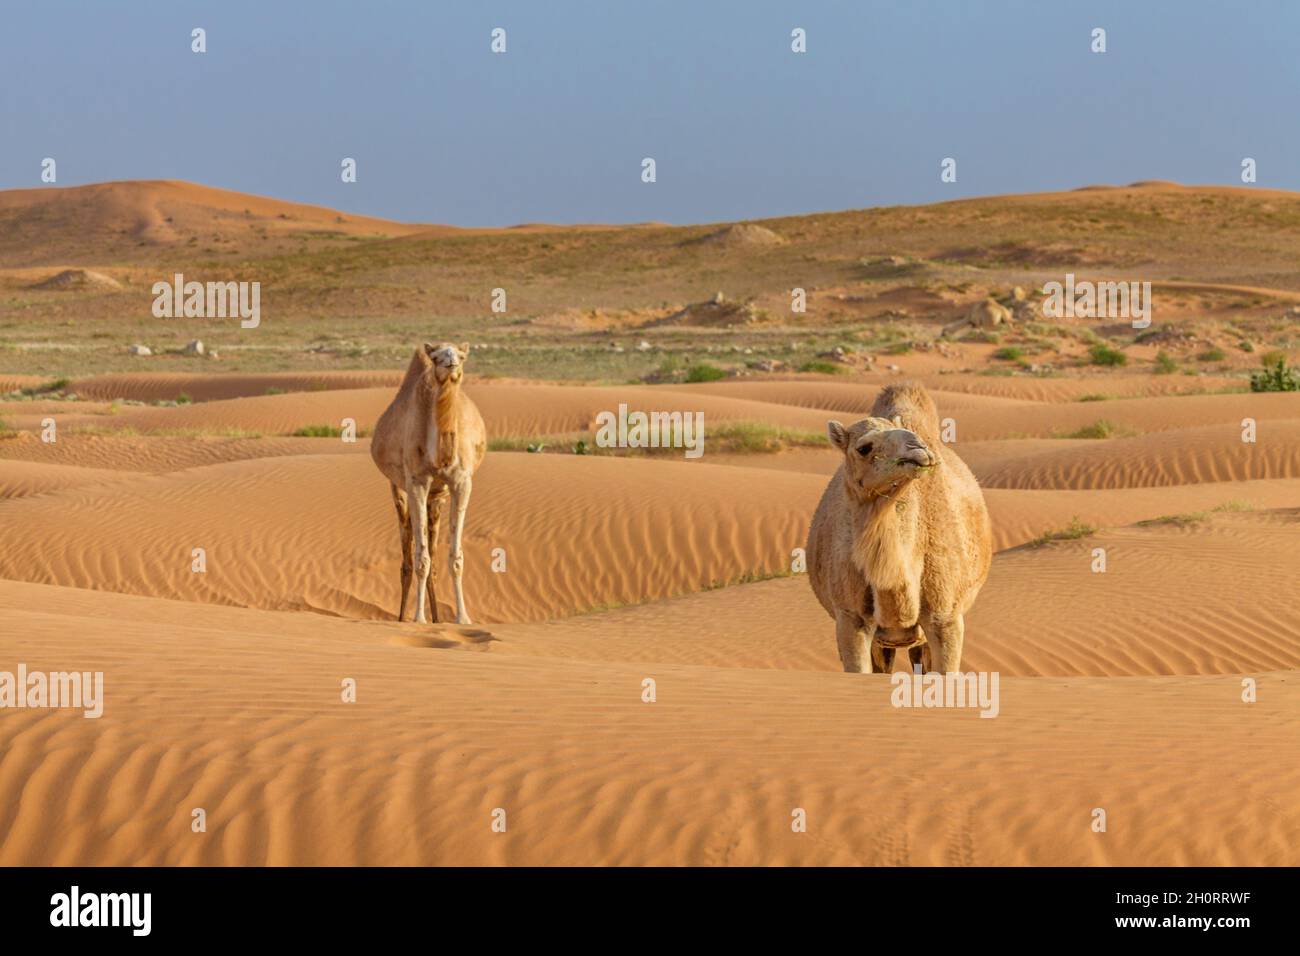 Two camels walking across sand dunes in the desert, Saudi Arabia Stock Photo